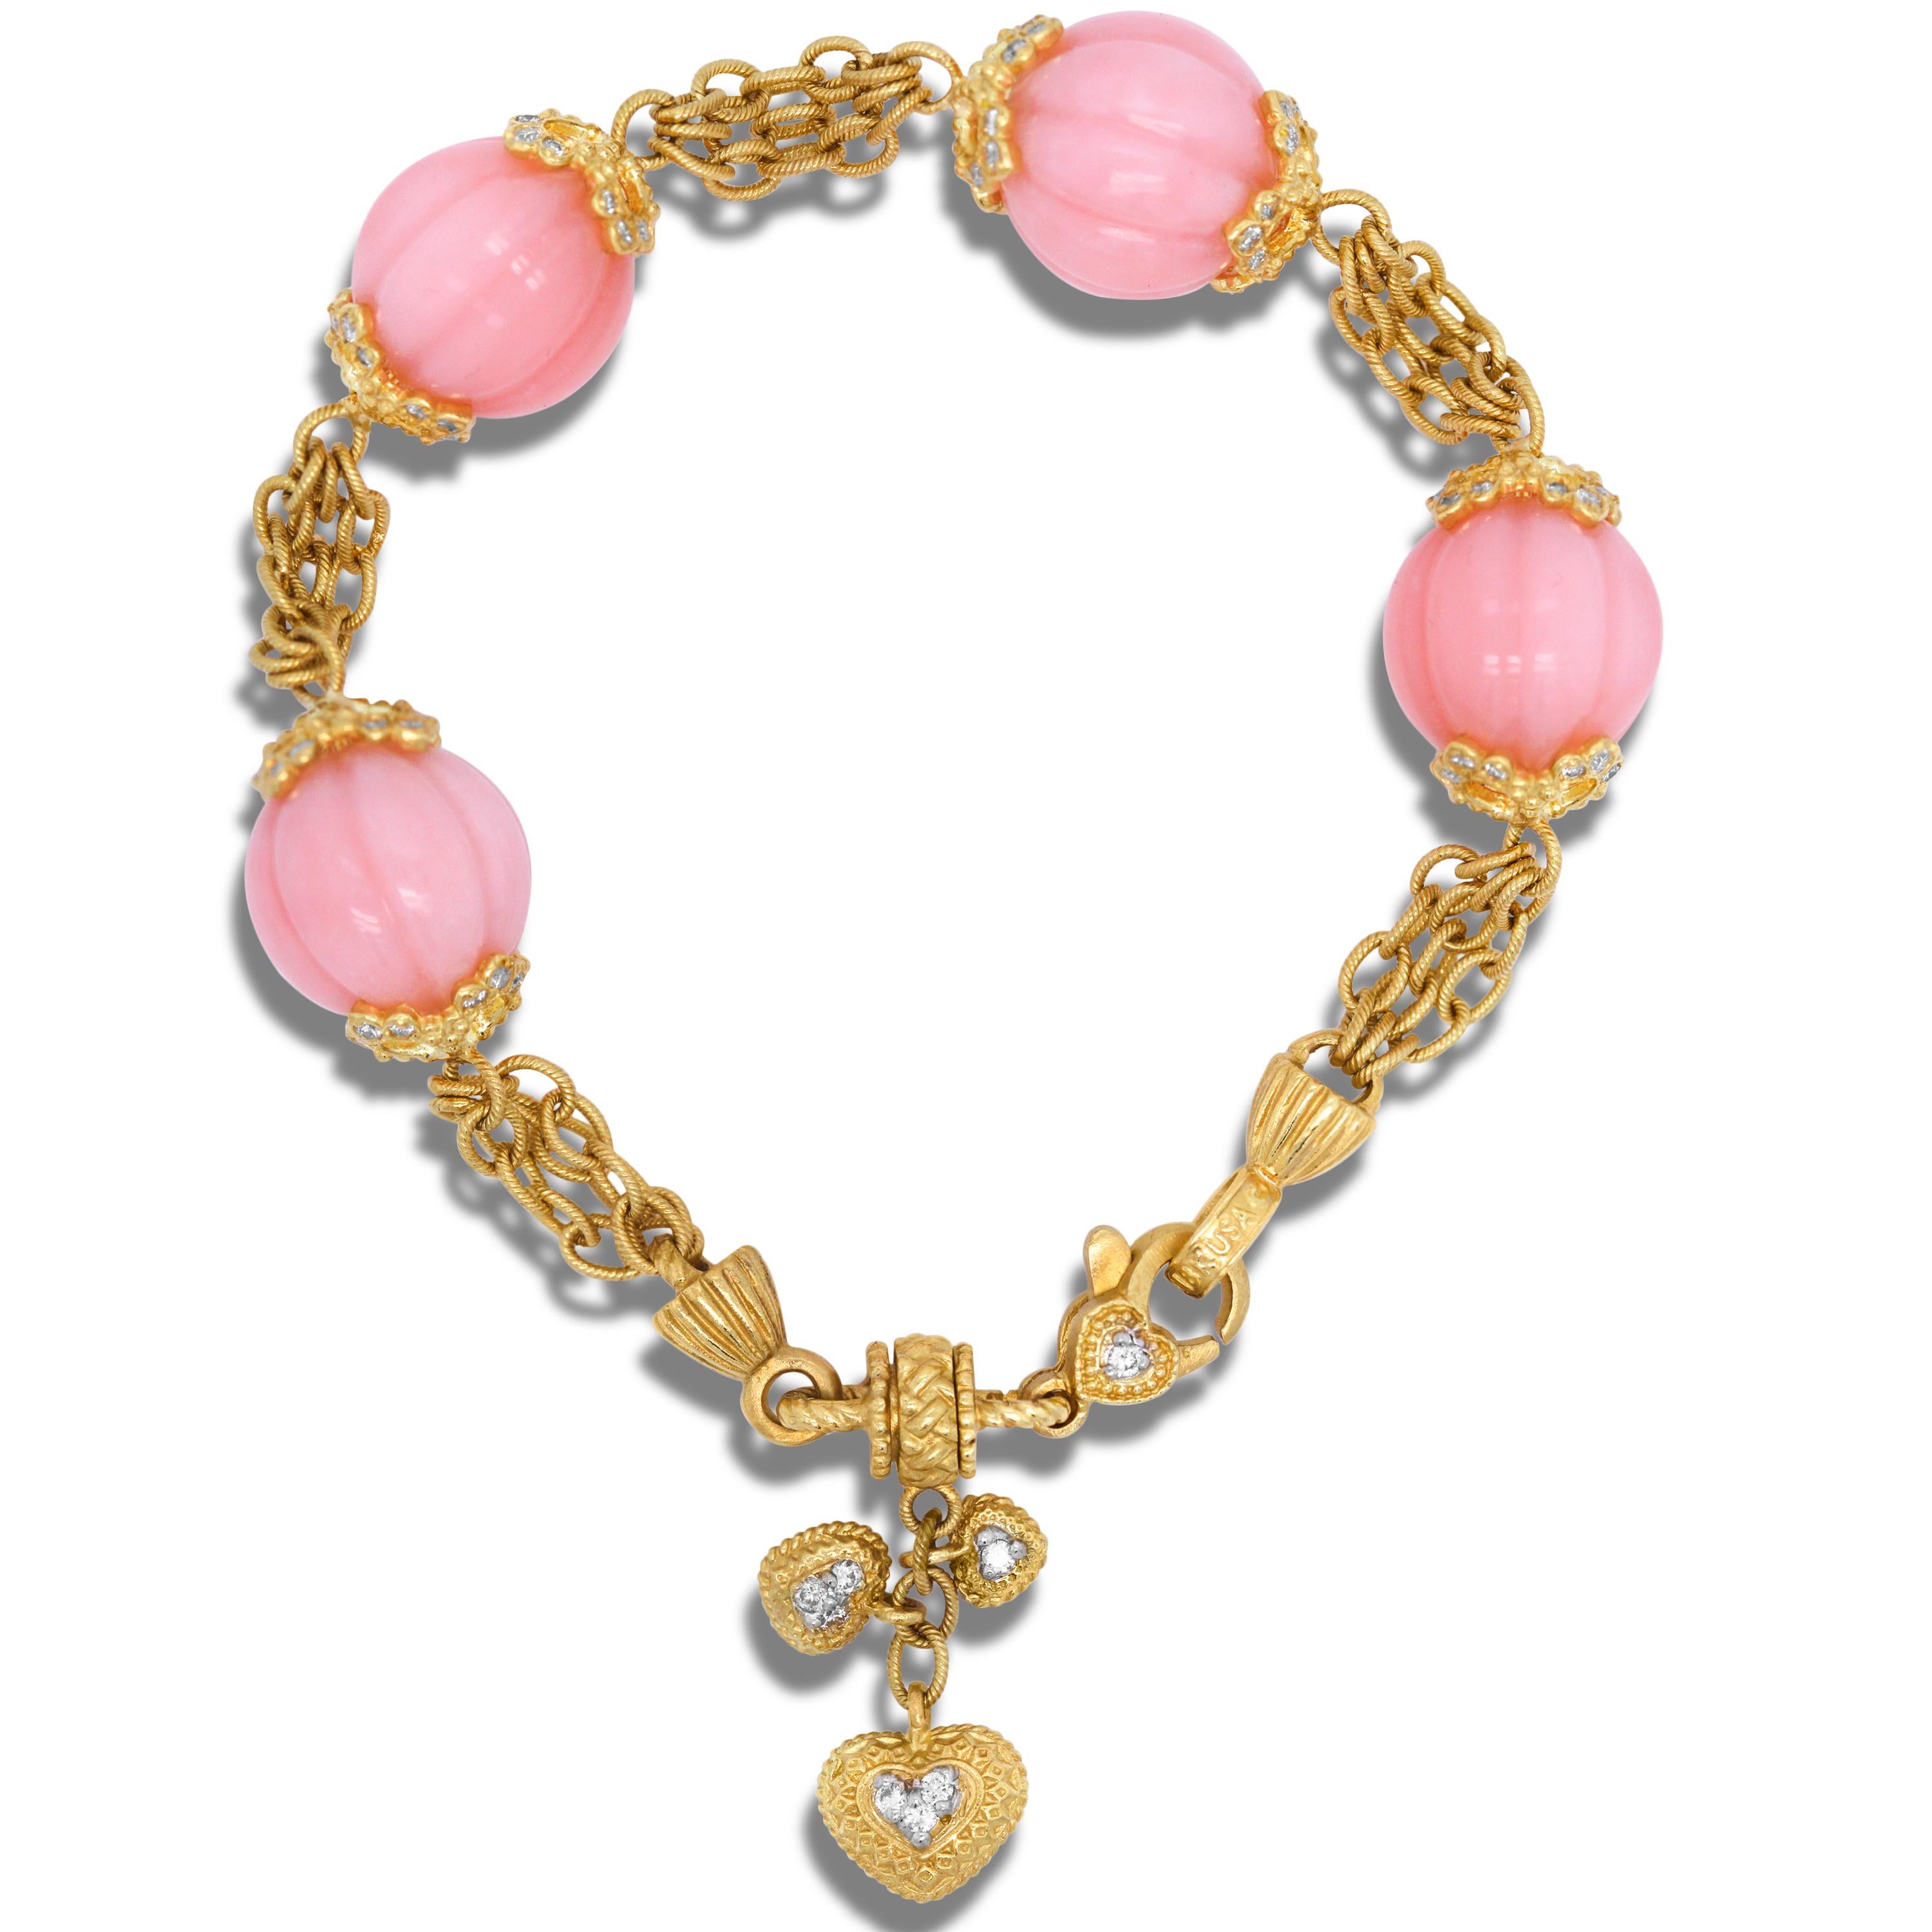 Round Cut Stambolian Pink Peruvian Opal 18K Yellow Gold Diamond Charm Bracelet with Hearts